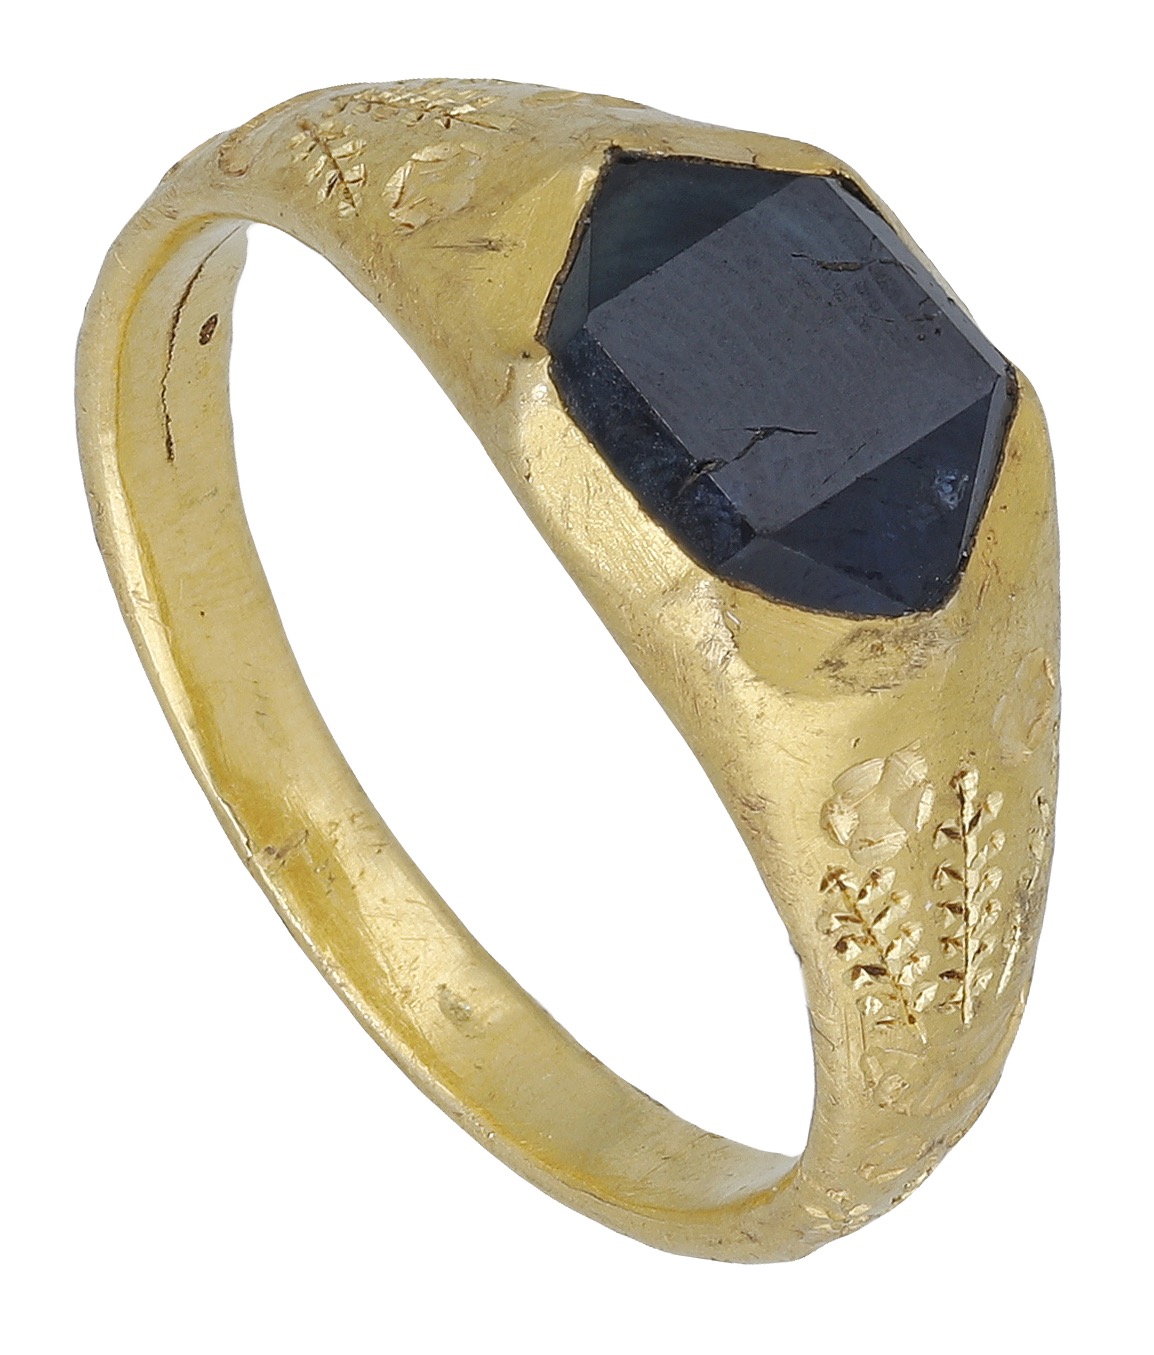 The Tarrant Abbey Ring